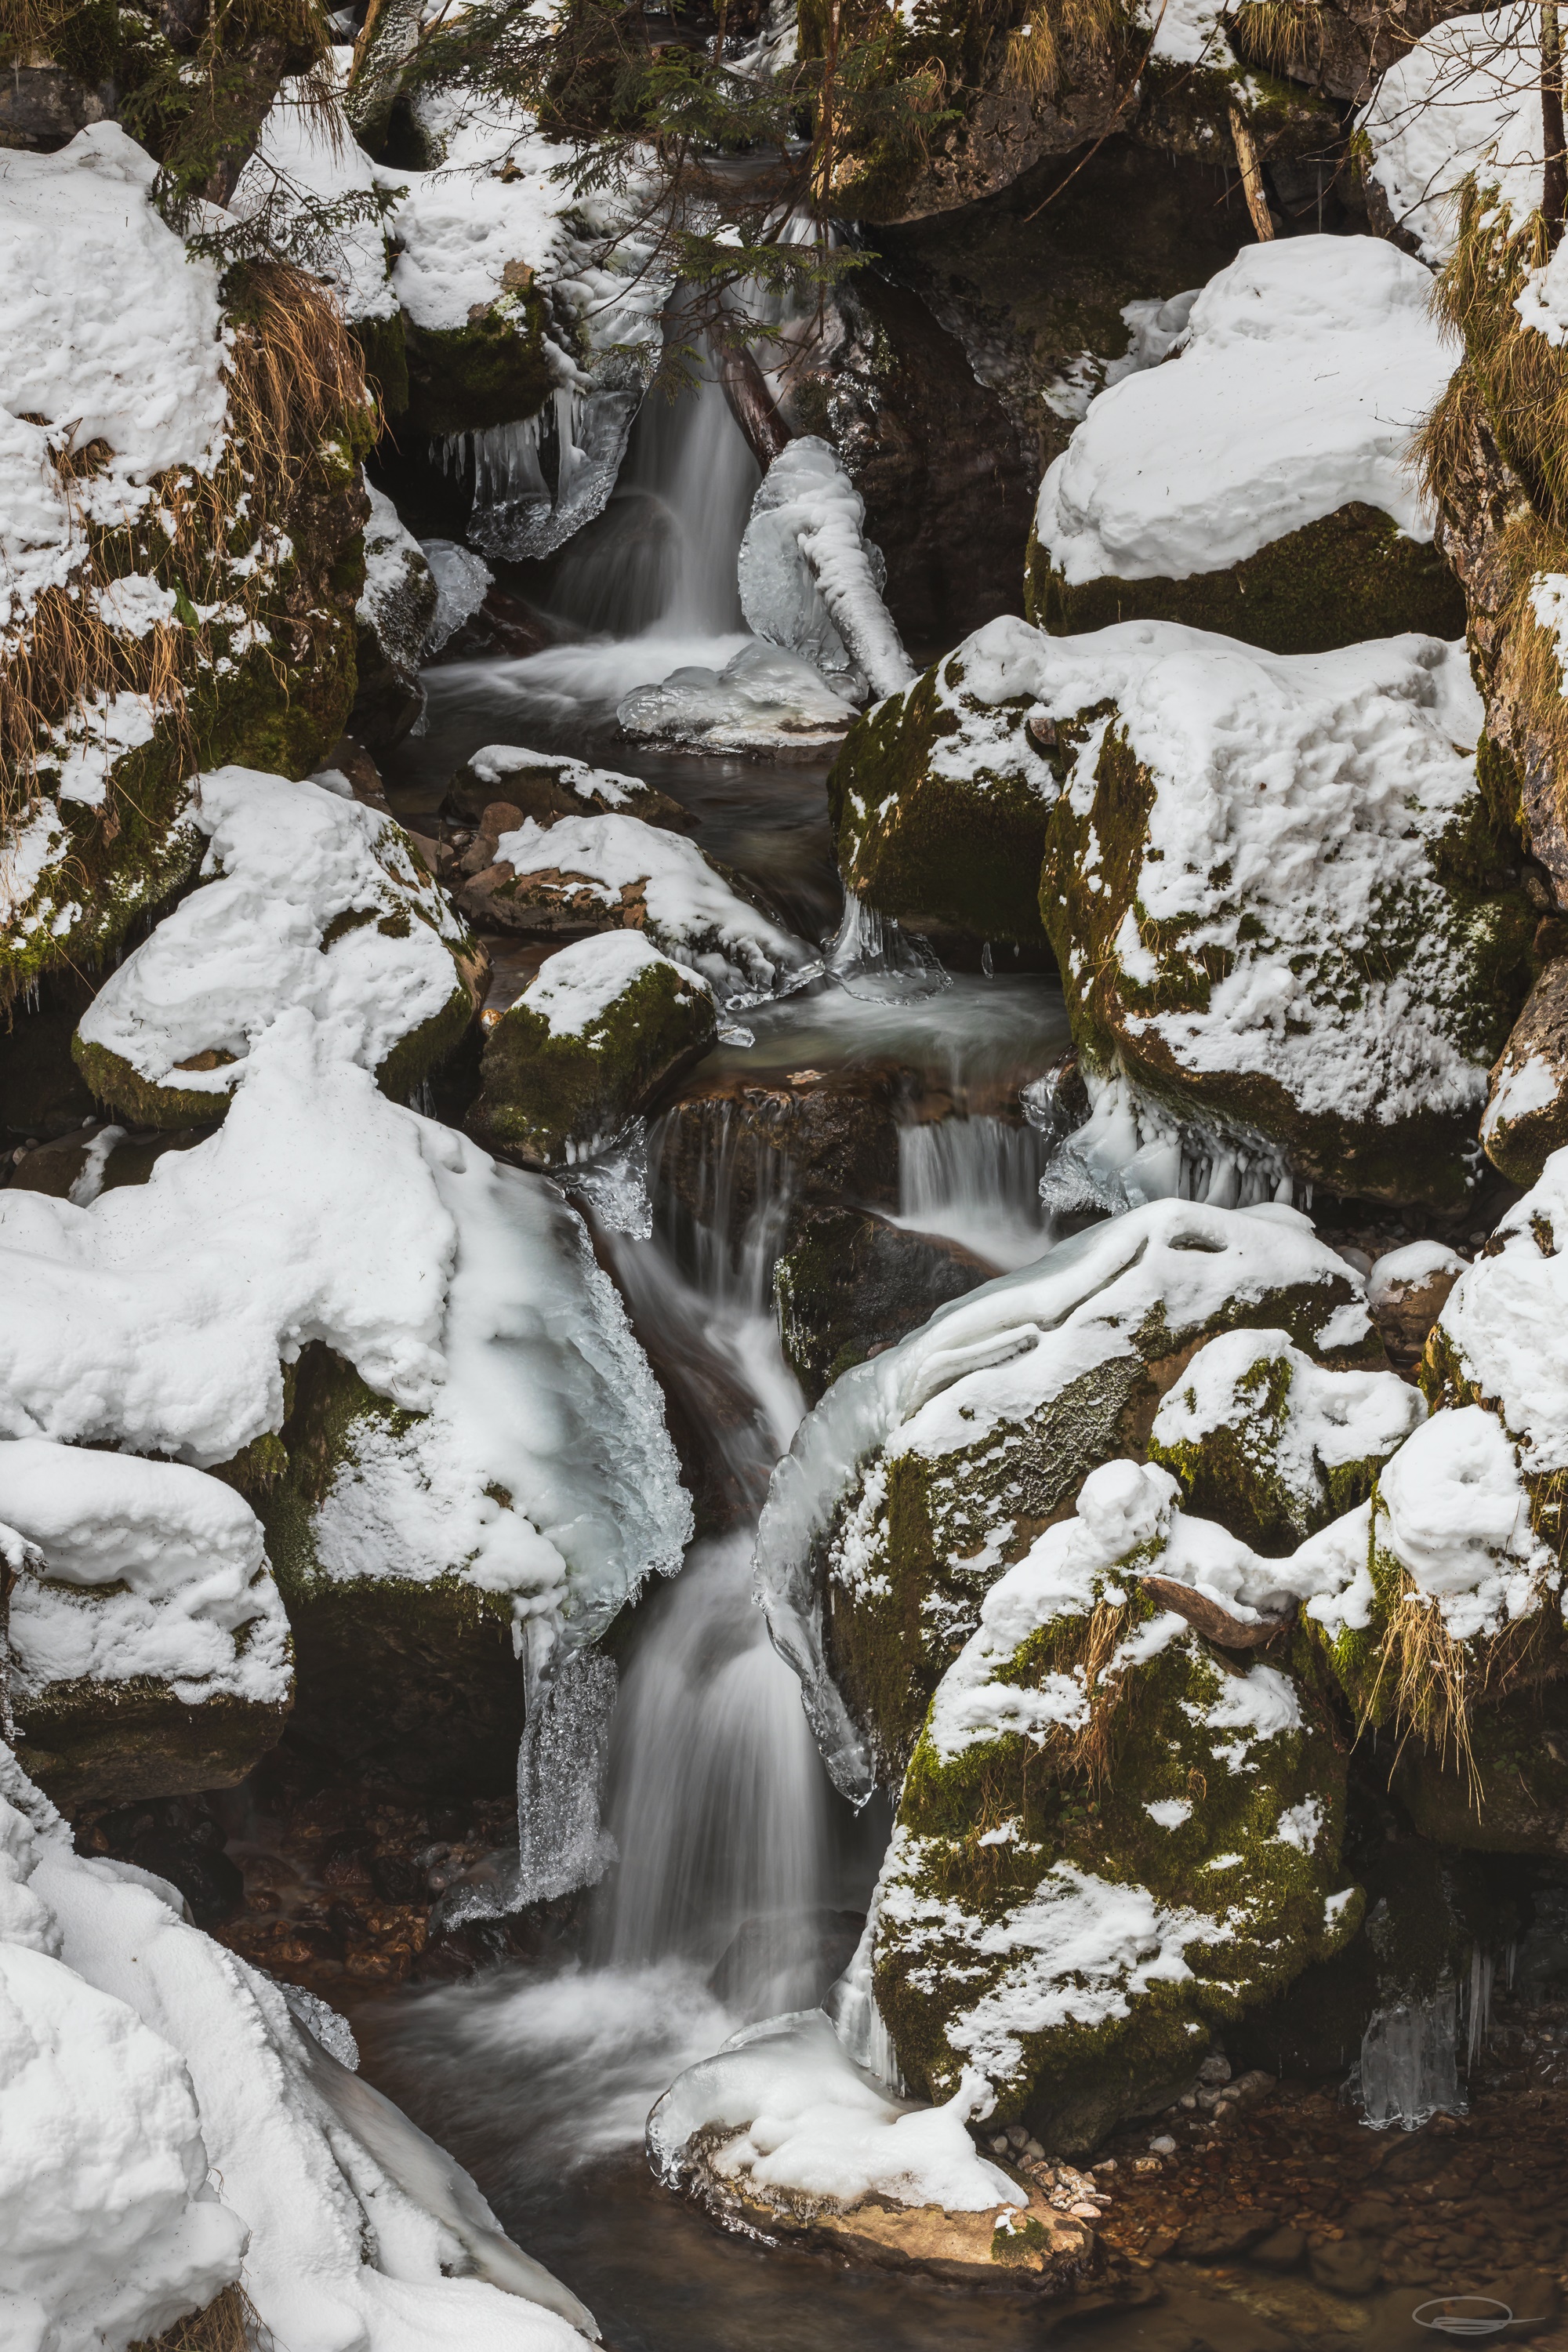 Wintertime: Freezing Water and Icy Waterfalls - Hartelsgraben / Gesäuse - Johann Piber